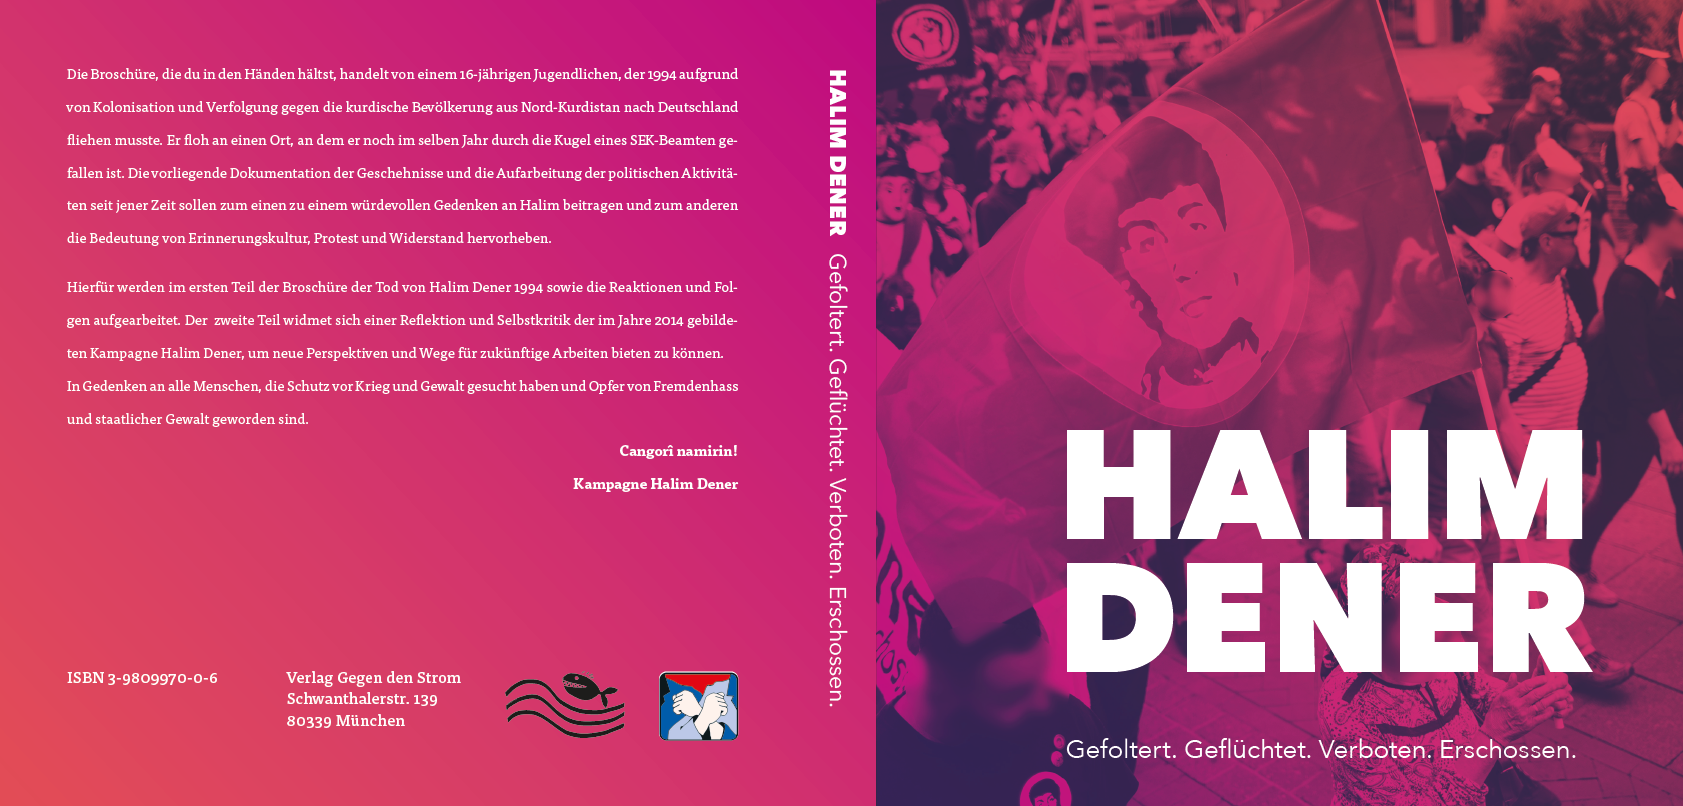 Halim-Dener-Buch Vorstellung Hannover NAV-DEM